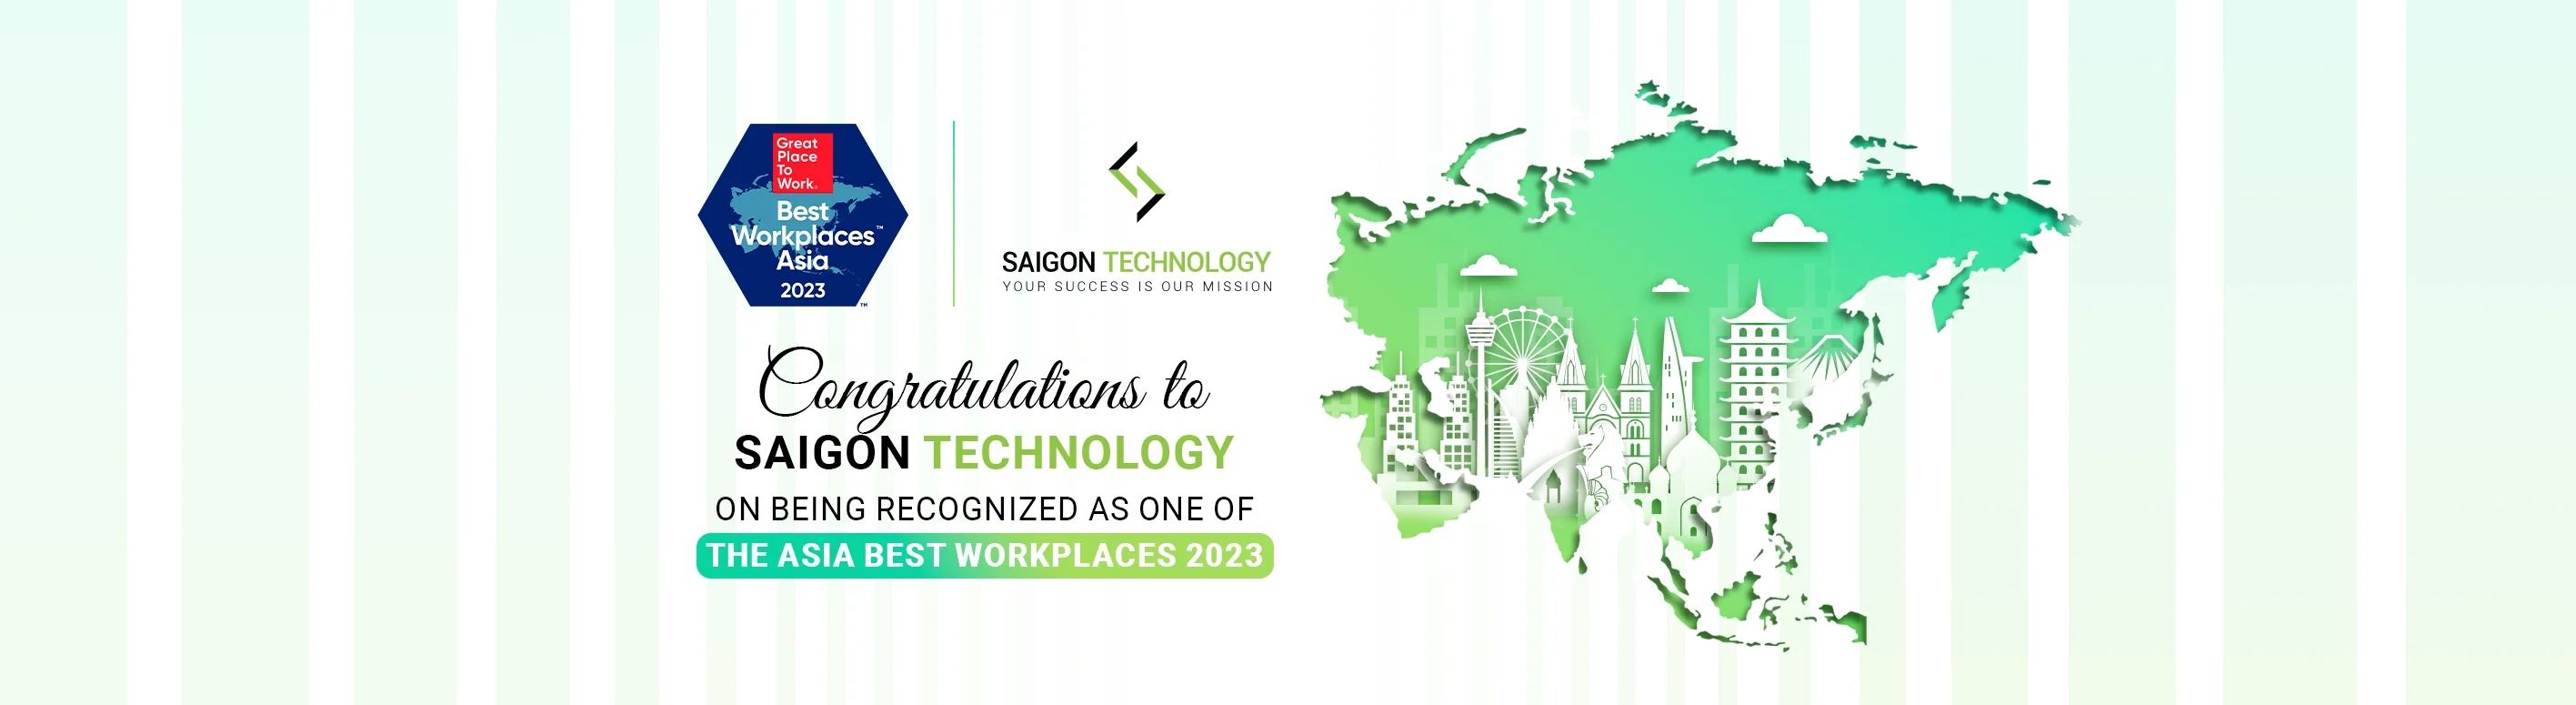 saigon_technology_0